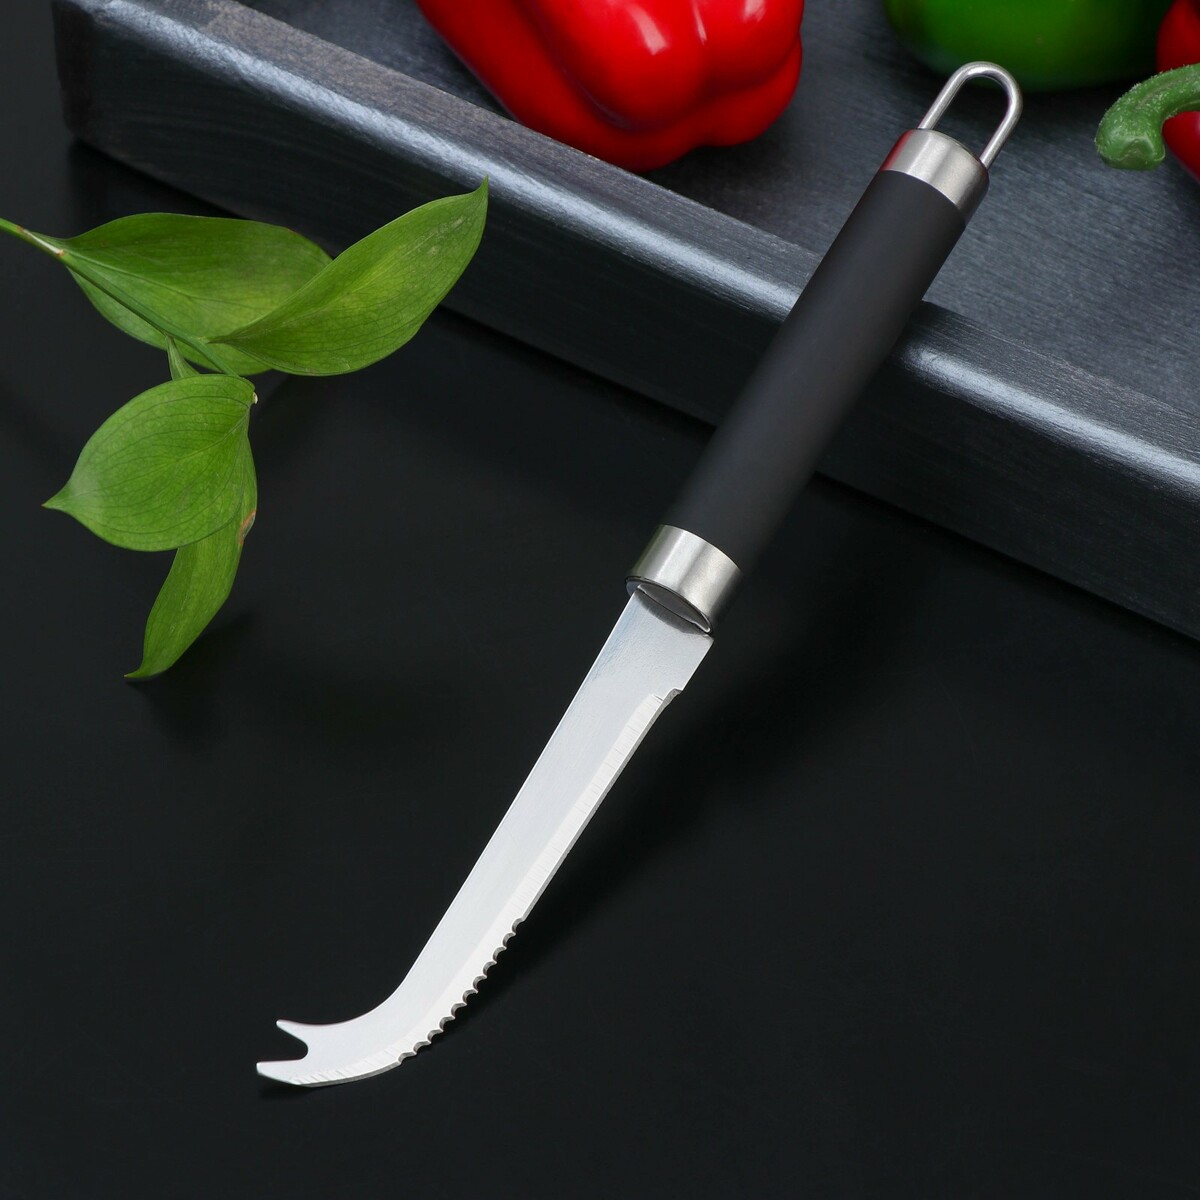 Нож для сыра доляна venus, нержавеющая сталь, цвет черный нож для сыра доляна venus нержавеющая сталь